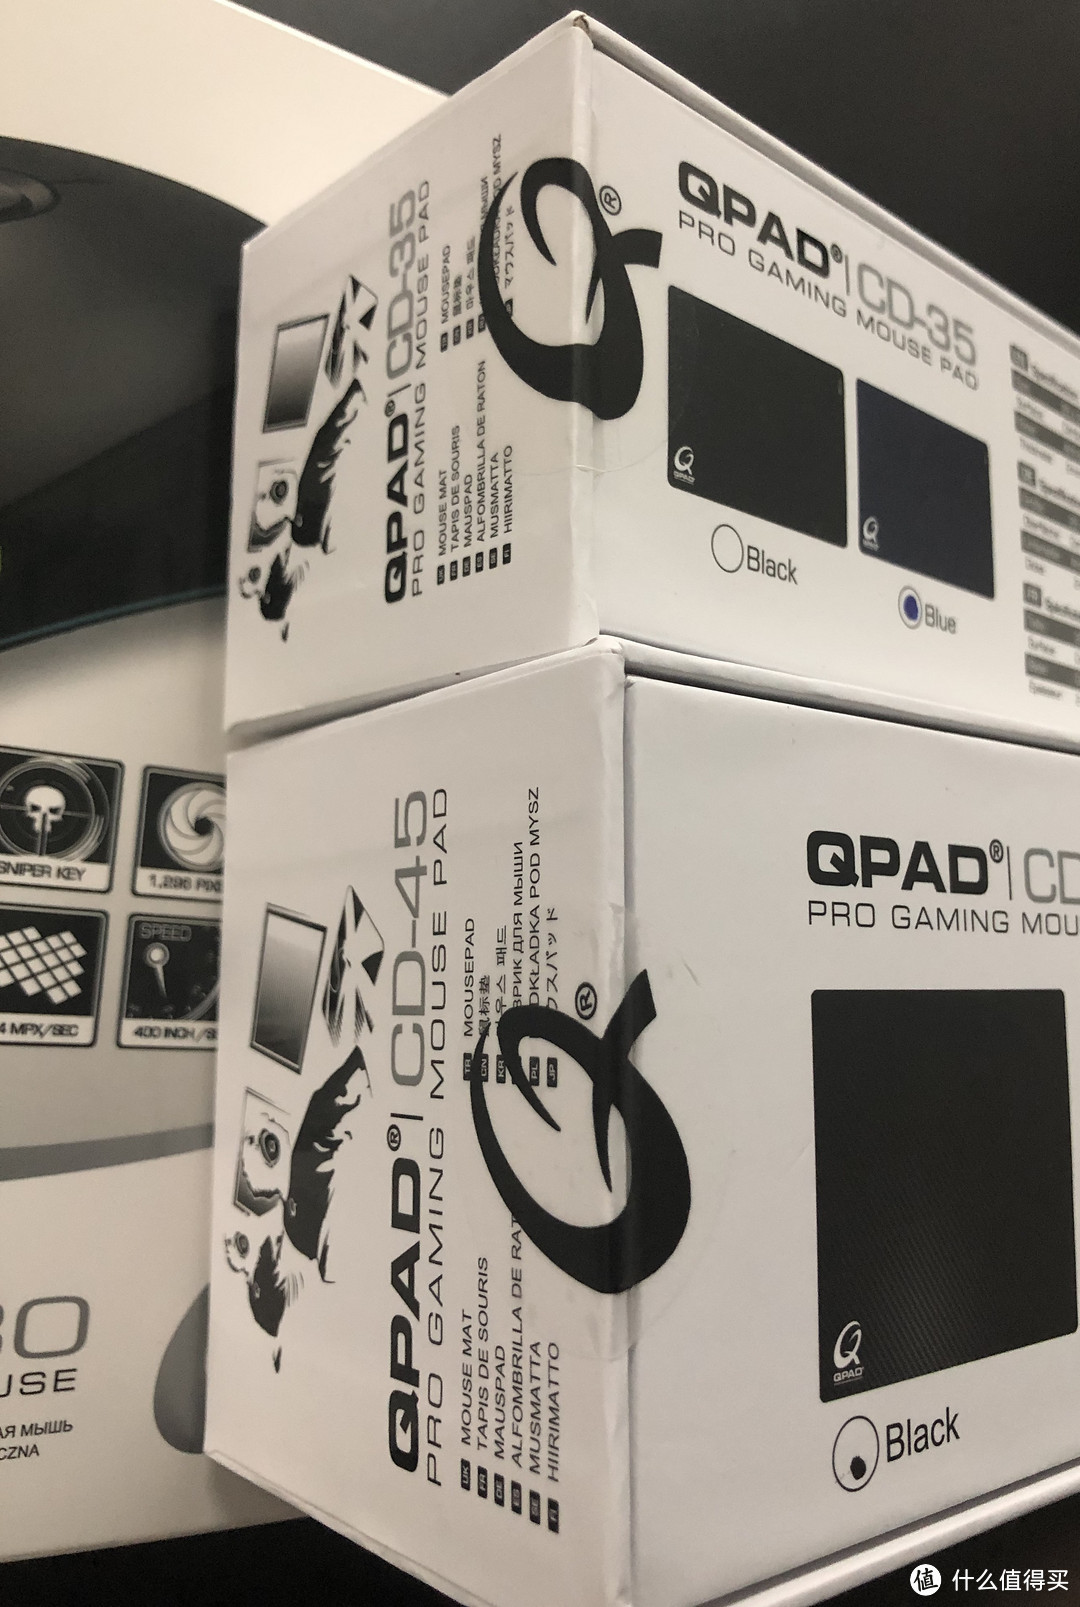 QPAD 酷倍达 CD-35/45画厂鼠标垫剁手开箱